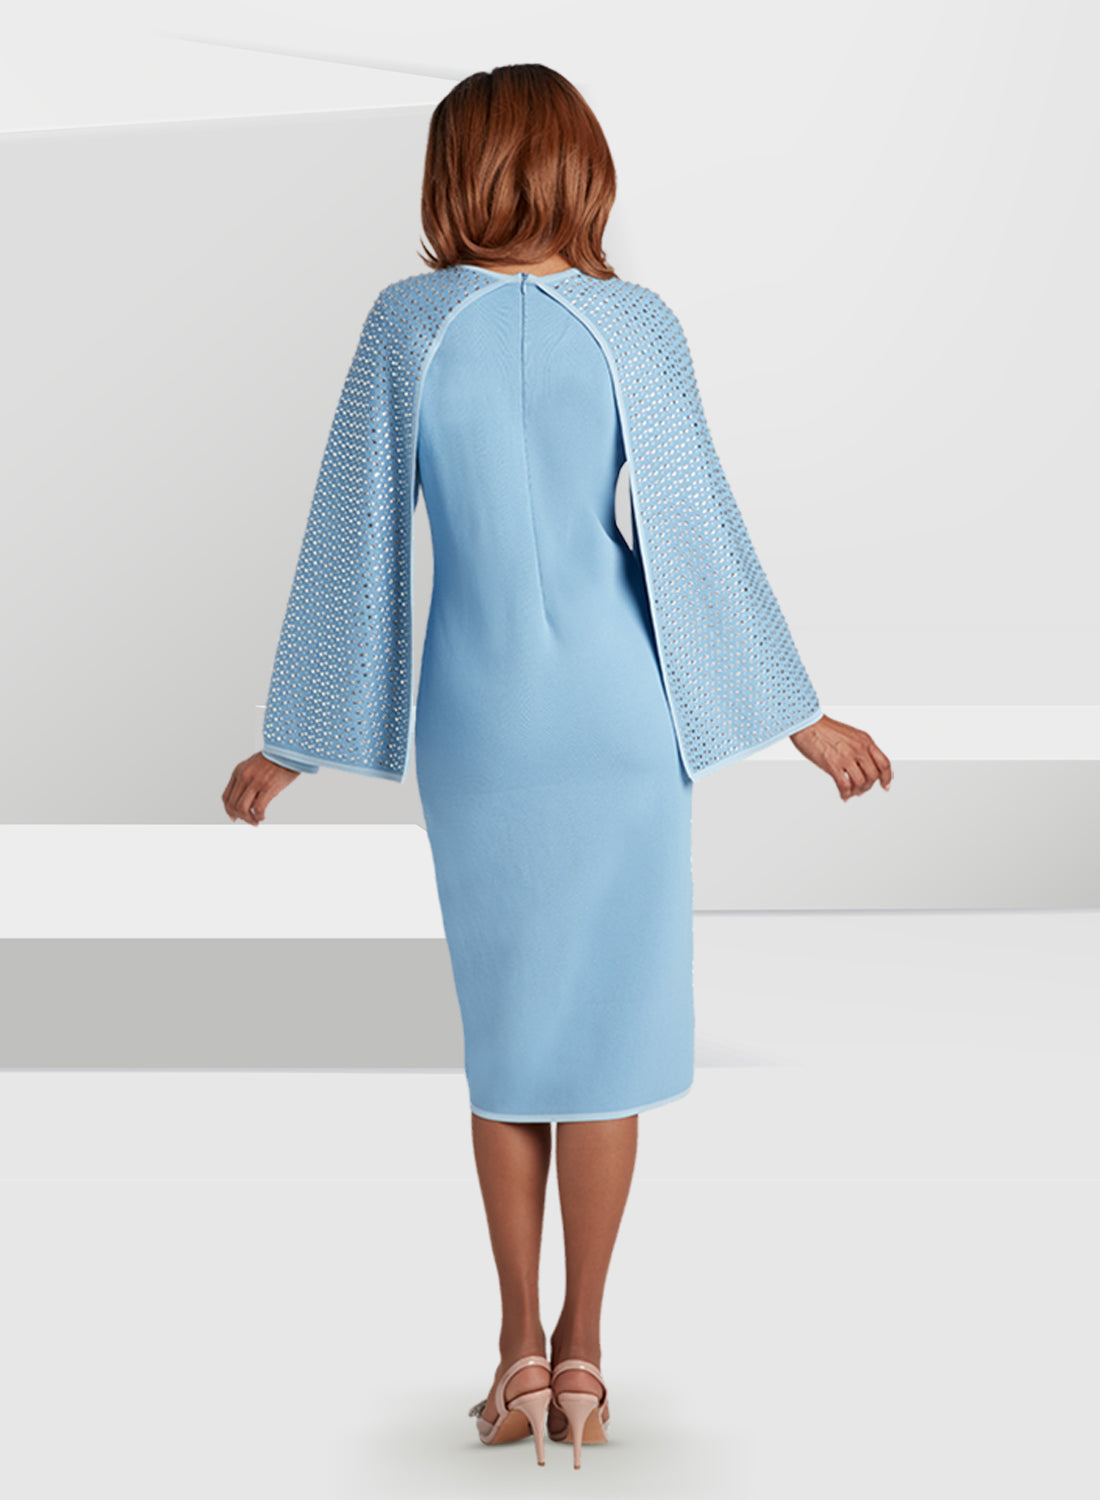 Donna Vinci 13402 - Sky Blue - Knit Cape Sleeve Rhinestone Dress